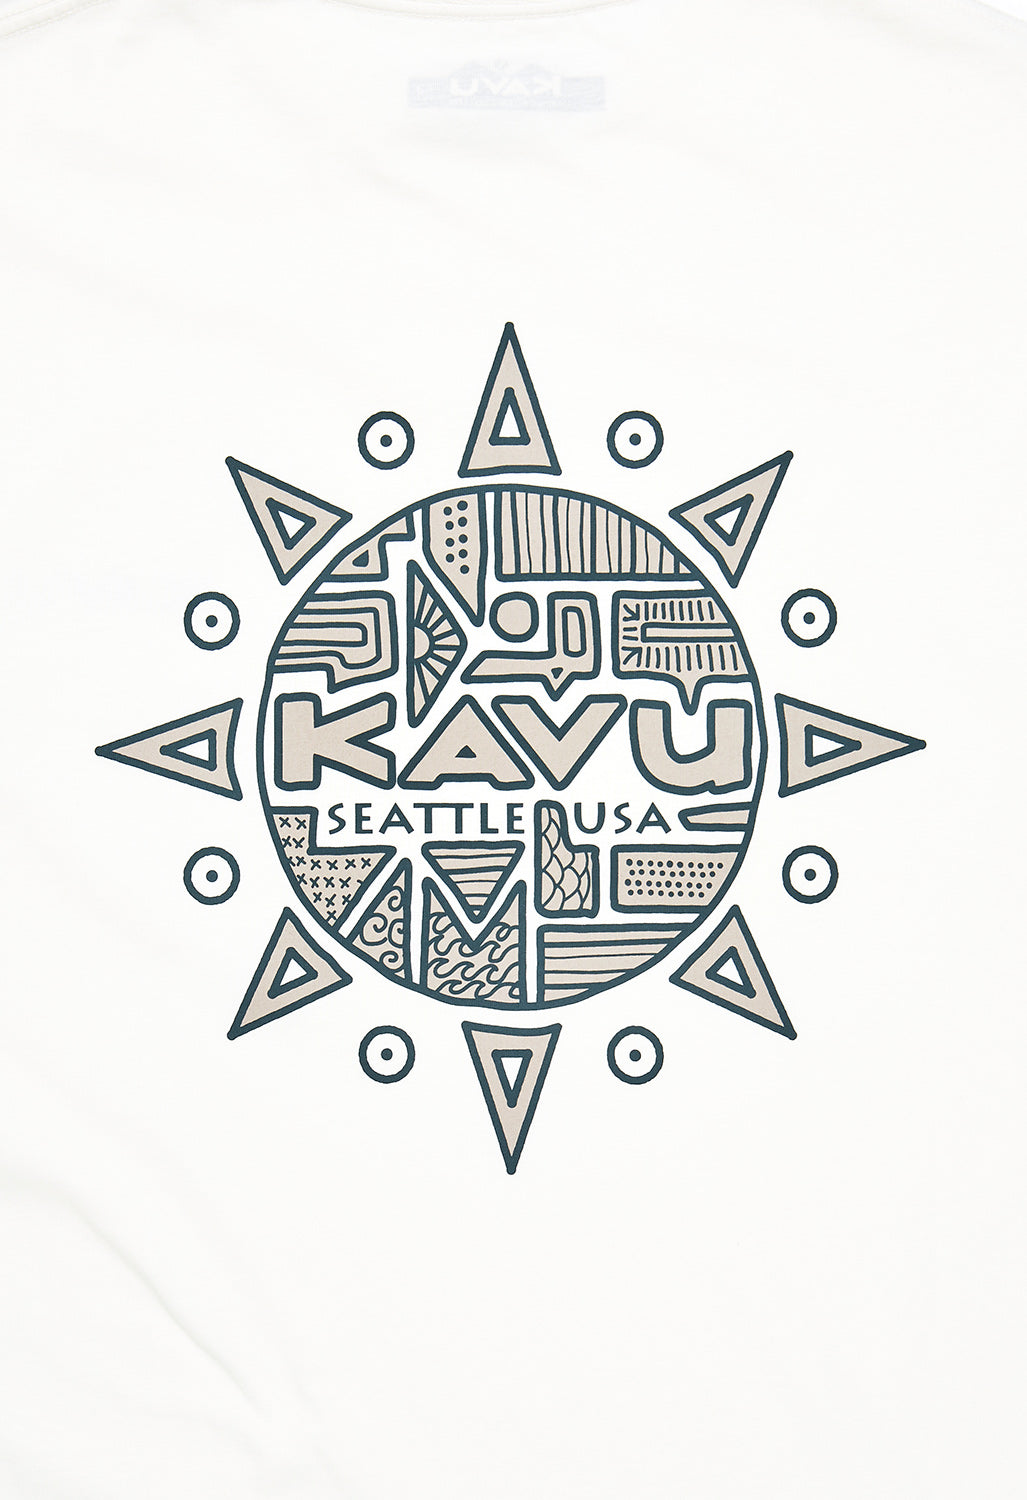 KAVU Men's Compass Tee - Off White